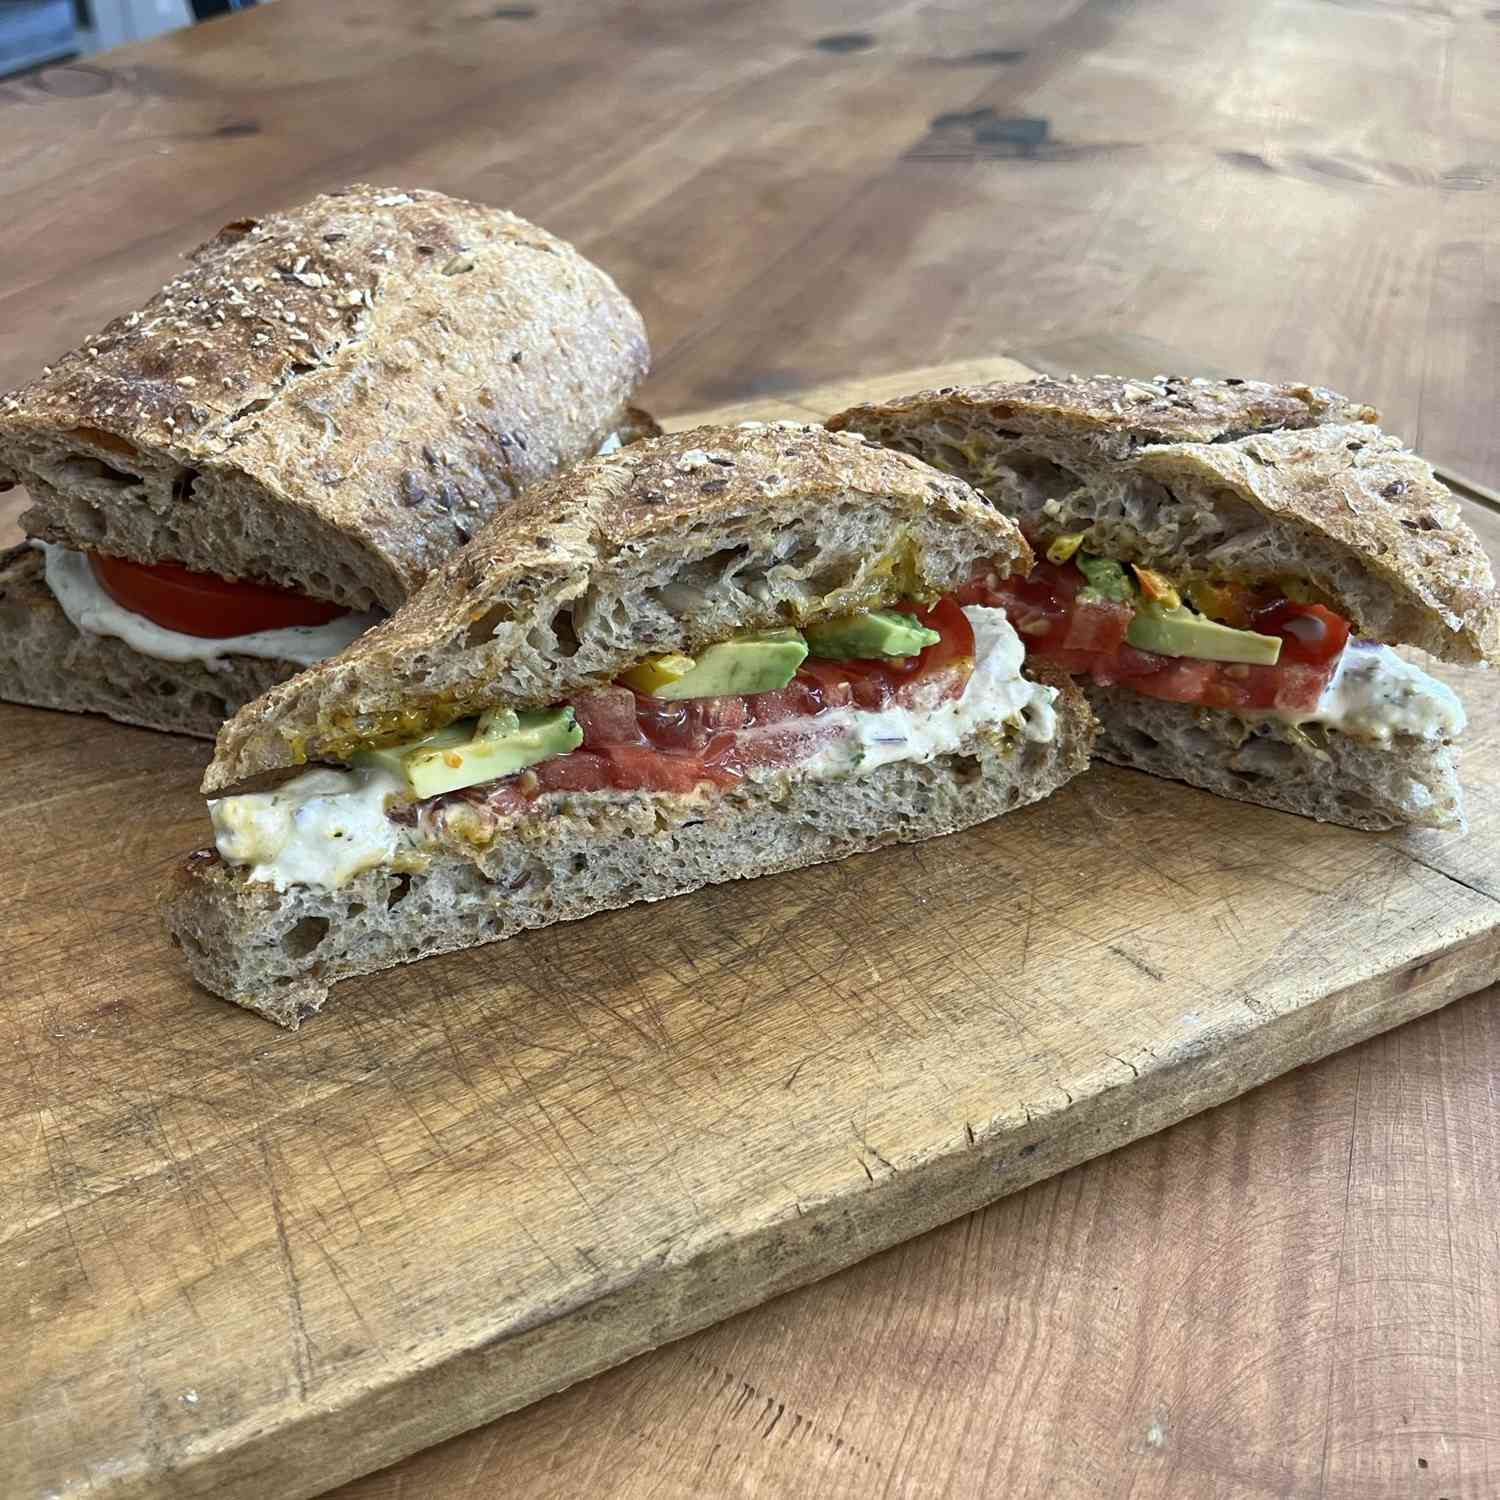 Whole grain bread topped with tuna salad, tomato, and avocado